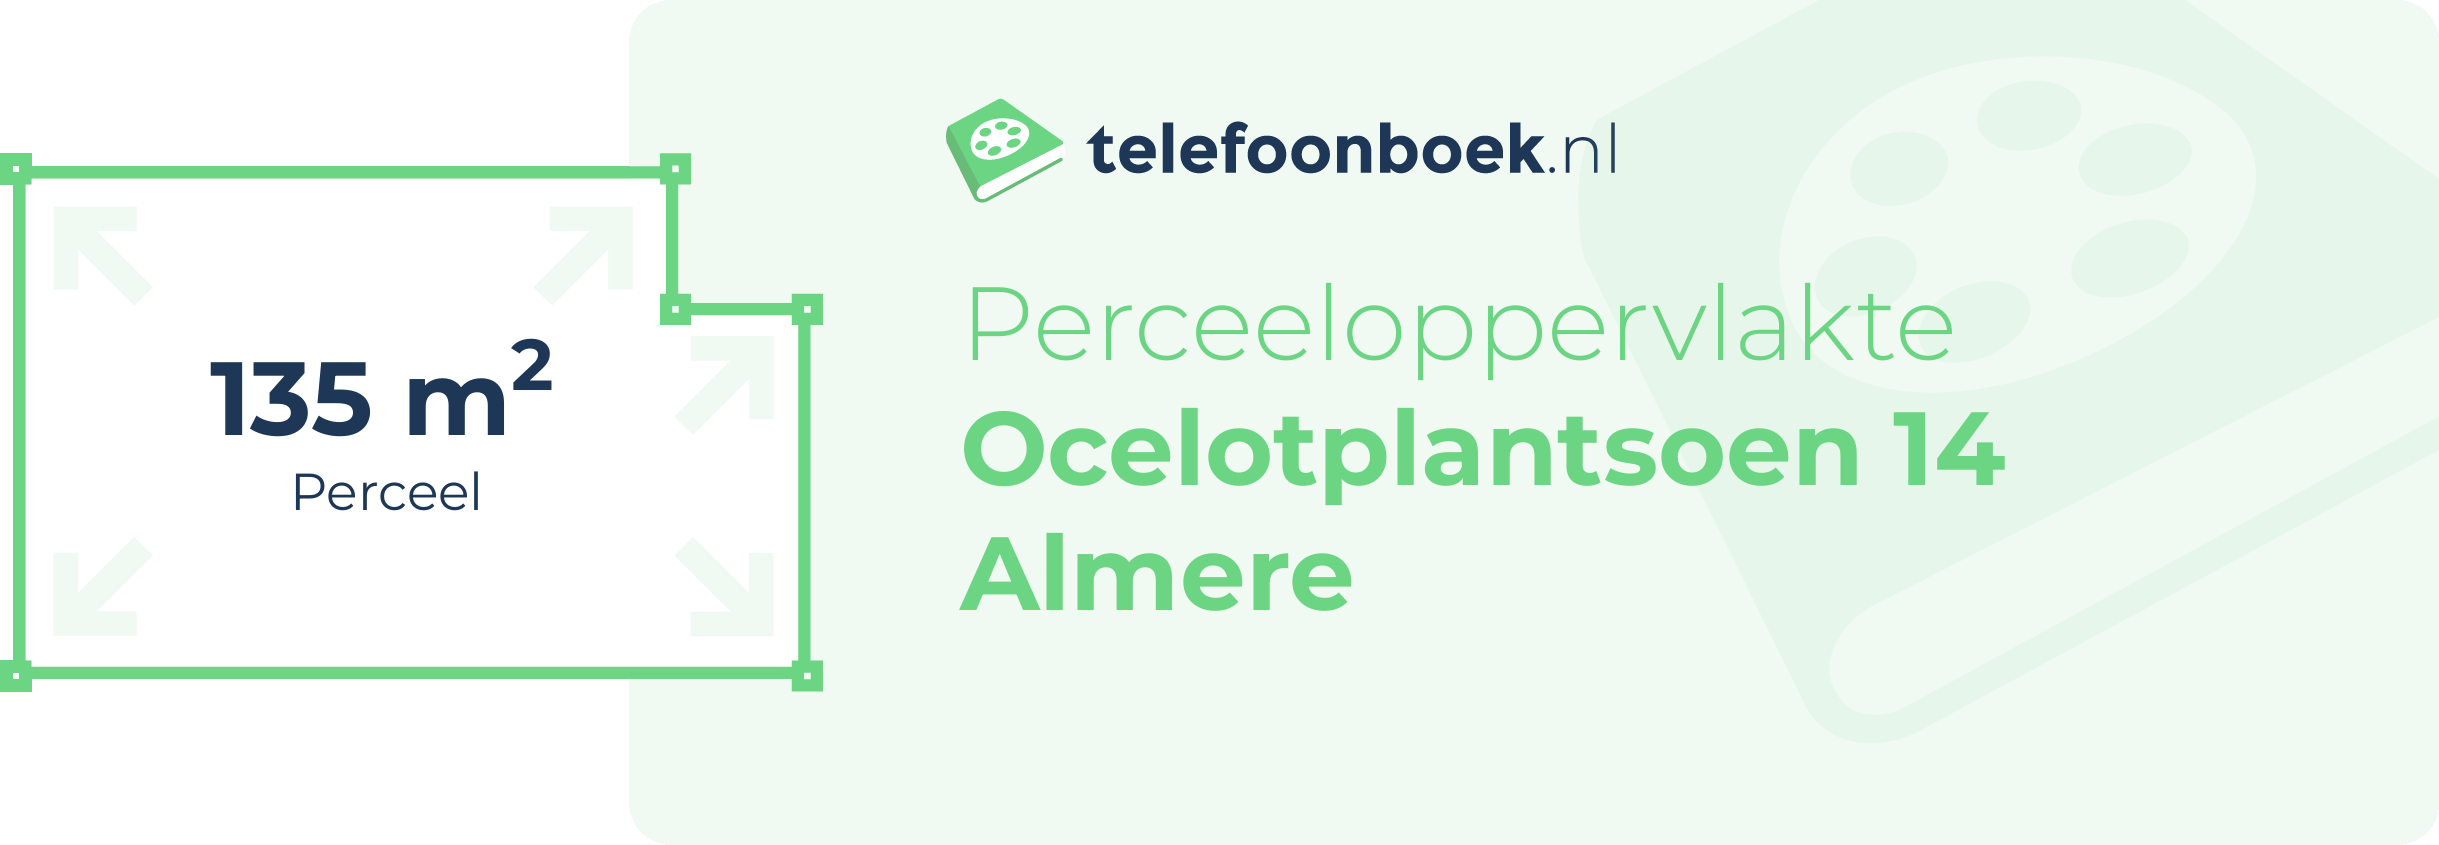 Perceeloppervlakte Ocelotplantsoen 14 Almere